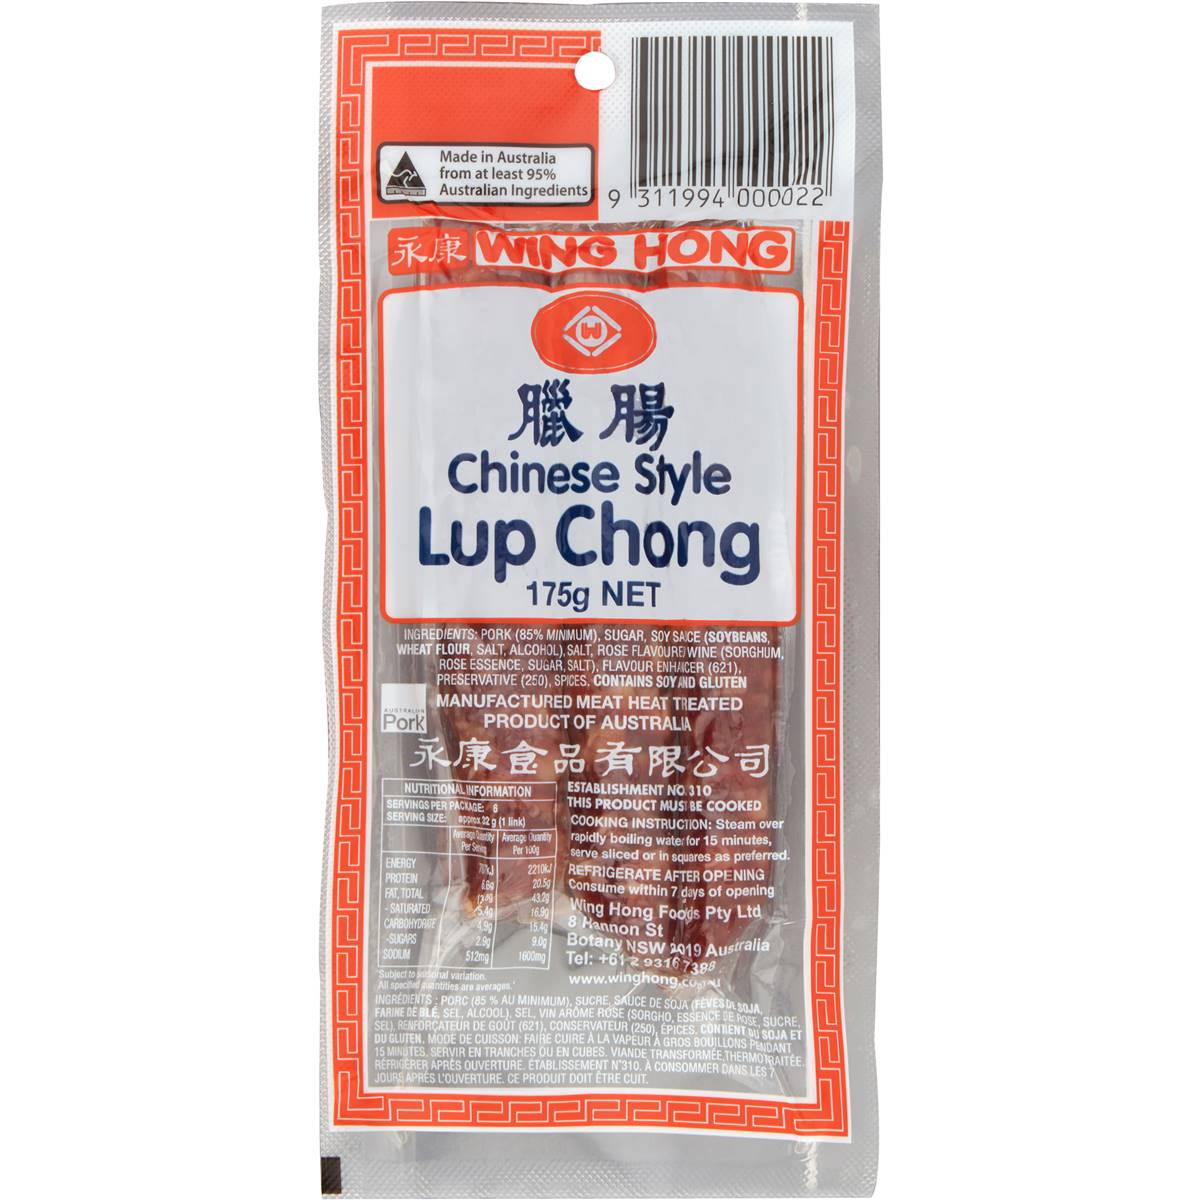 Calories in Wing Hong Lup Chong Chinese Pork Sausage